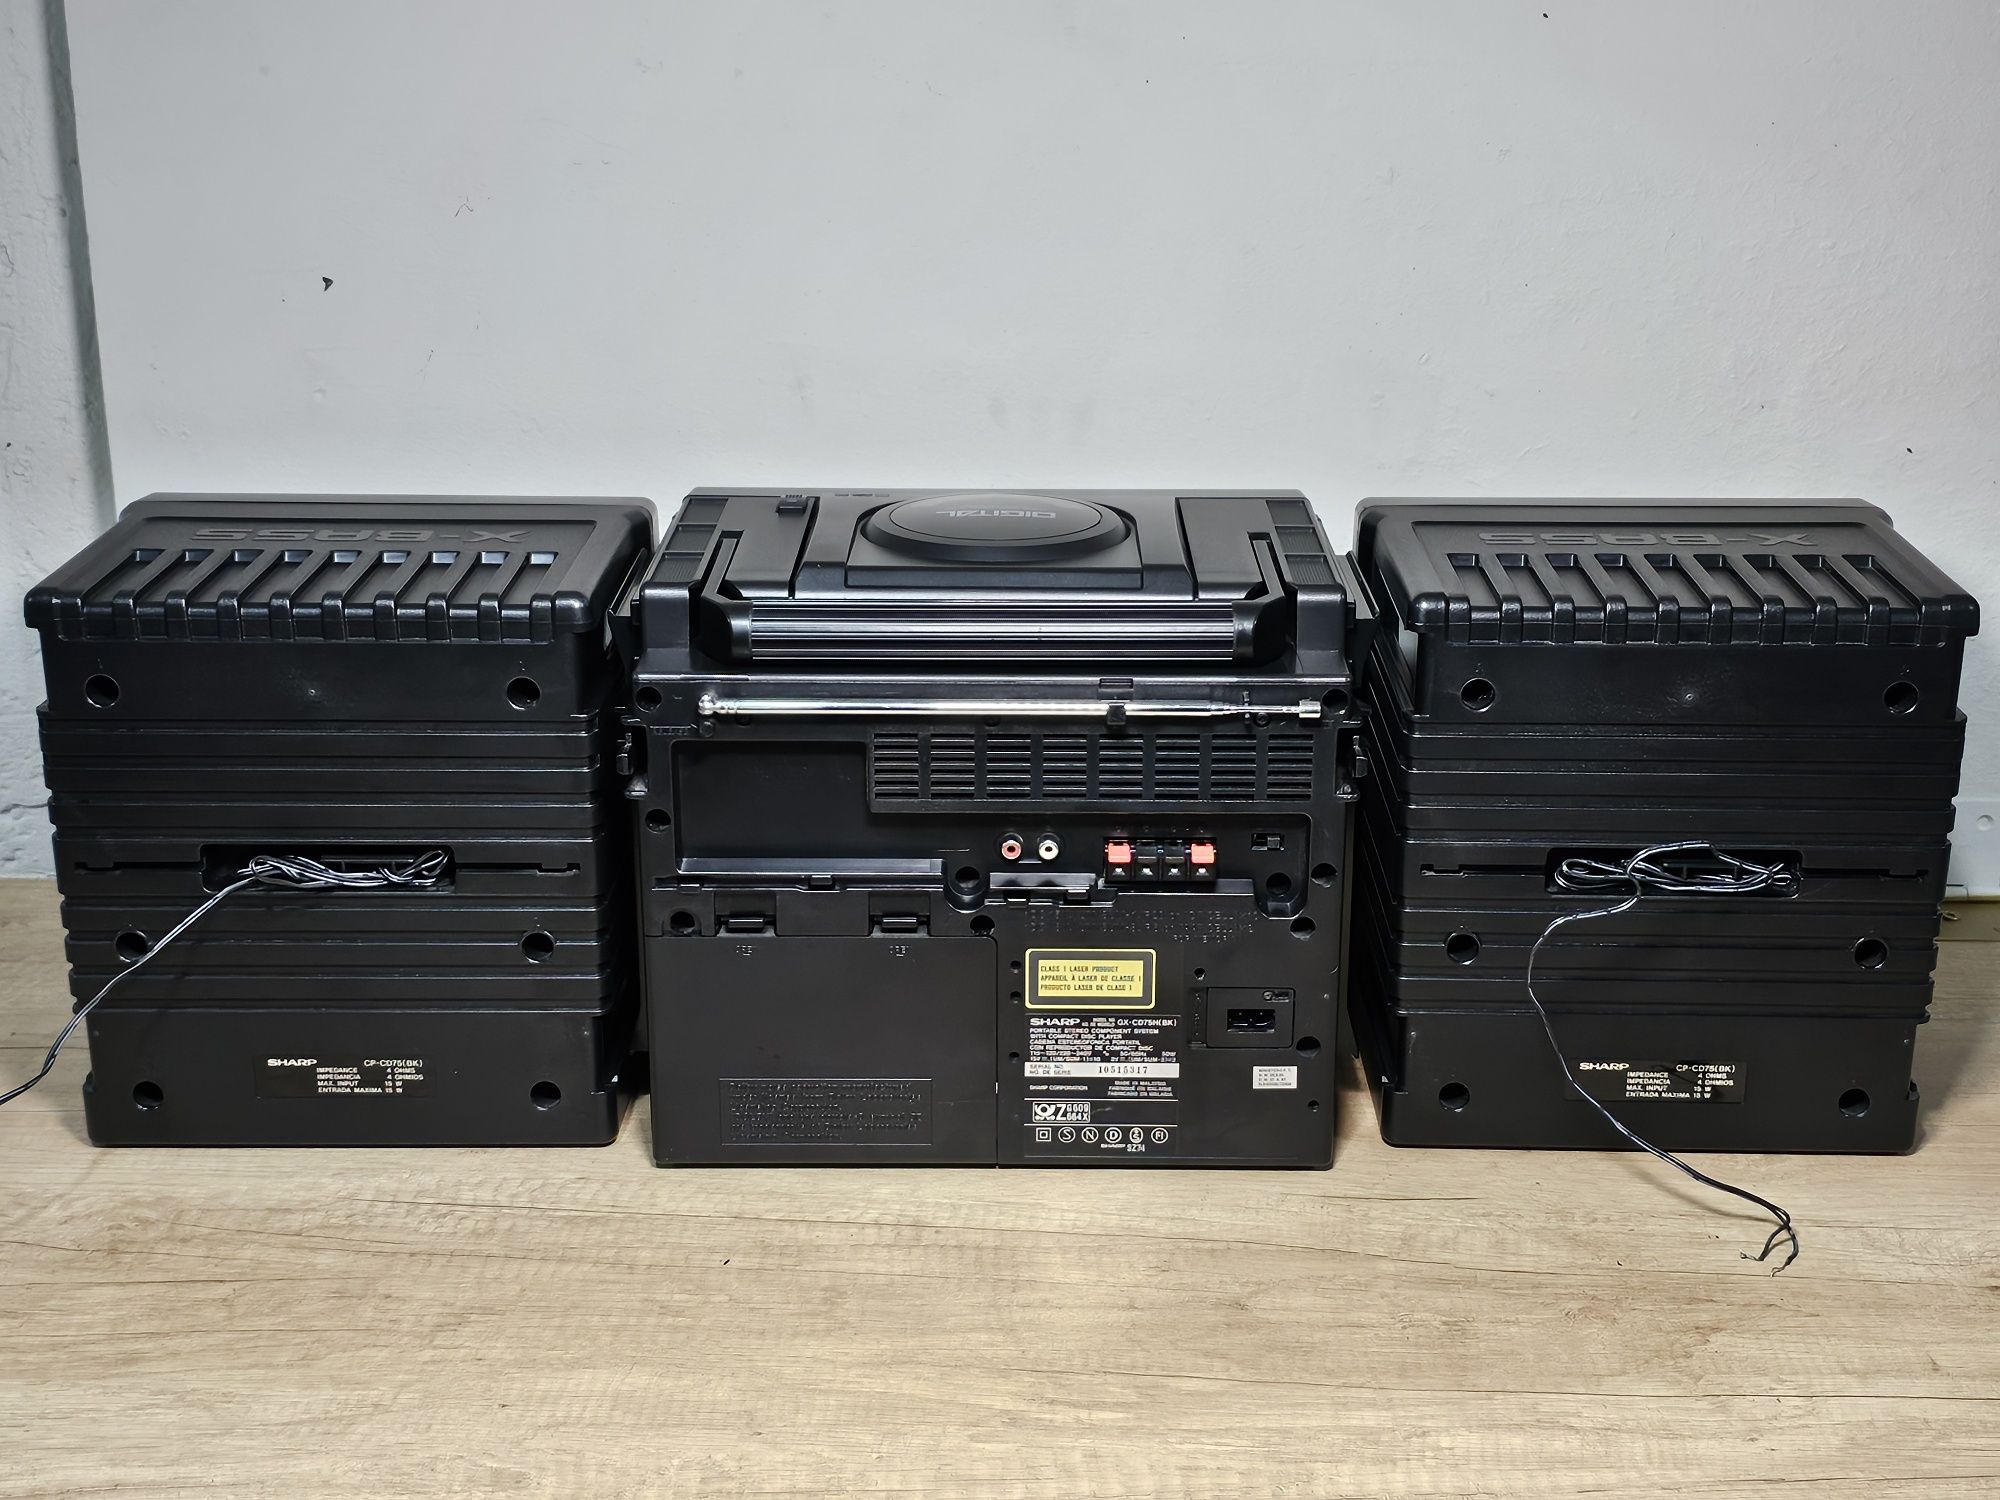 boombox SHARP gx-cd75h, dublu deck, cd player ,radio portabil